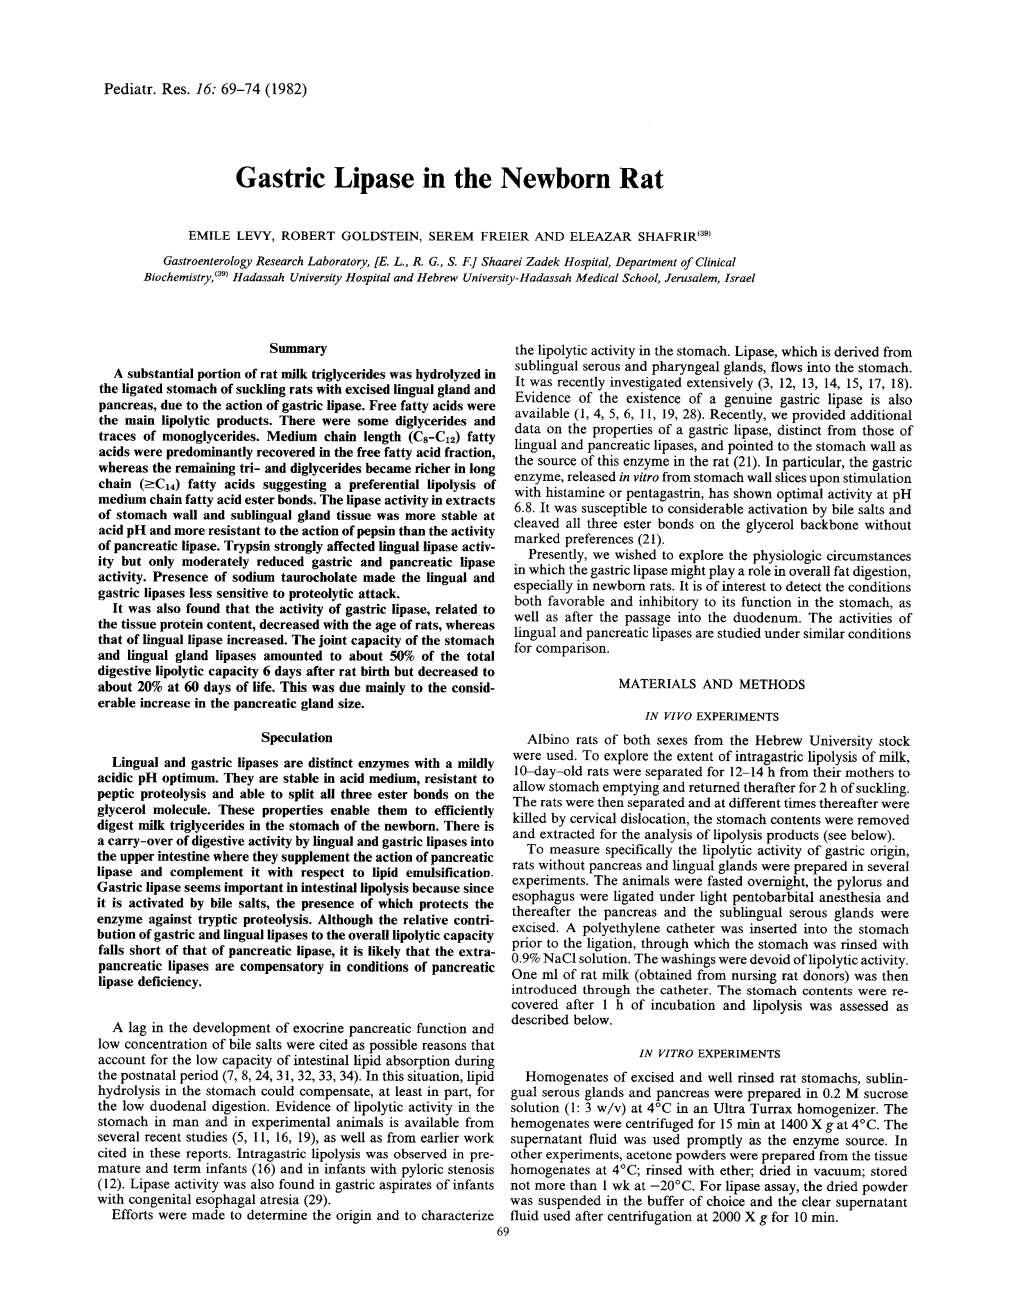 Gastric Lipase in the Newborn Rat